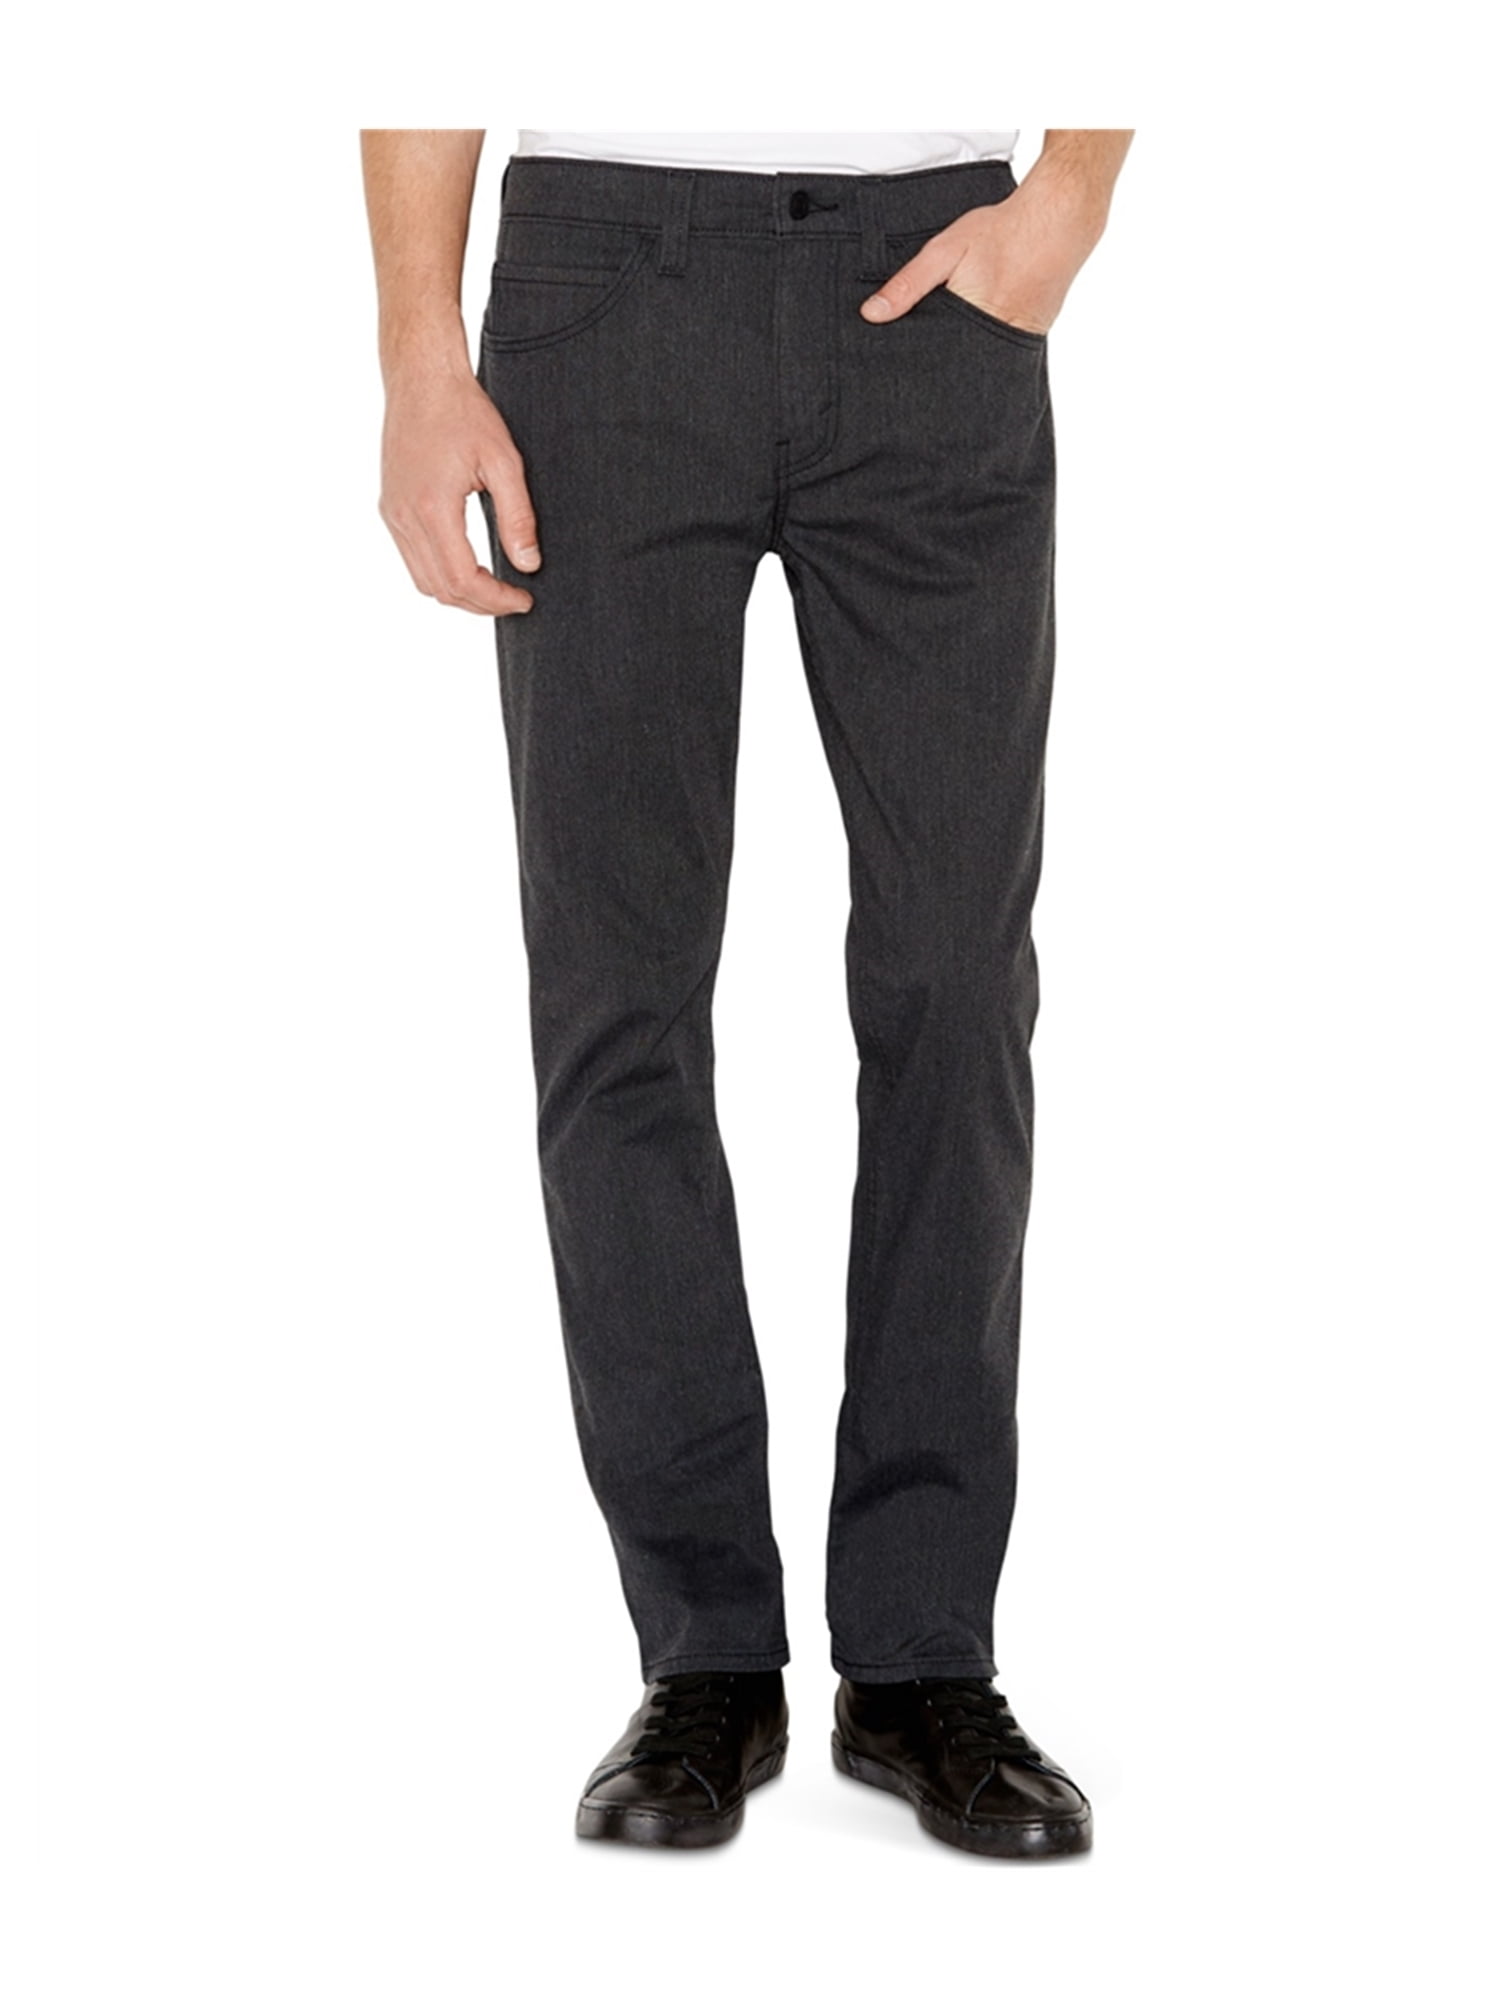 Levi's Mens Slim Fit Regular Fit Jeans black 36x32 | Walmart Canada